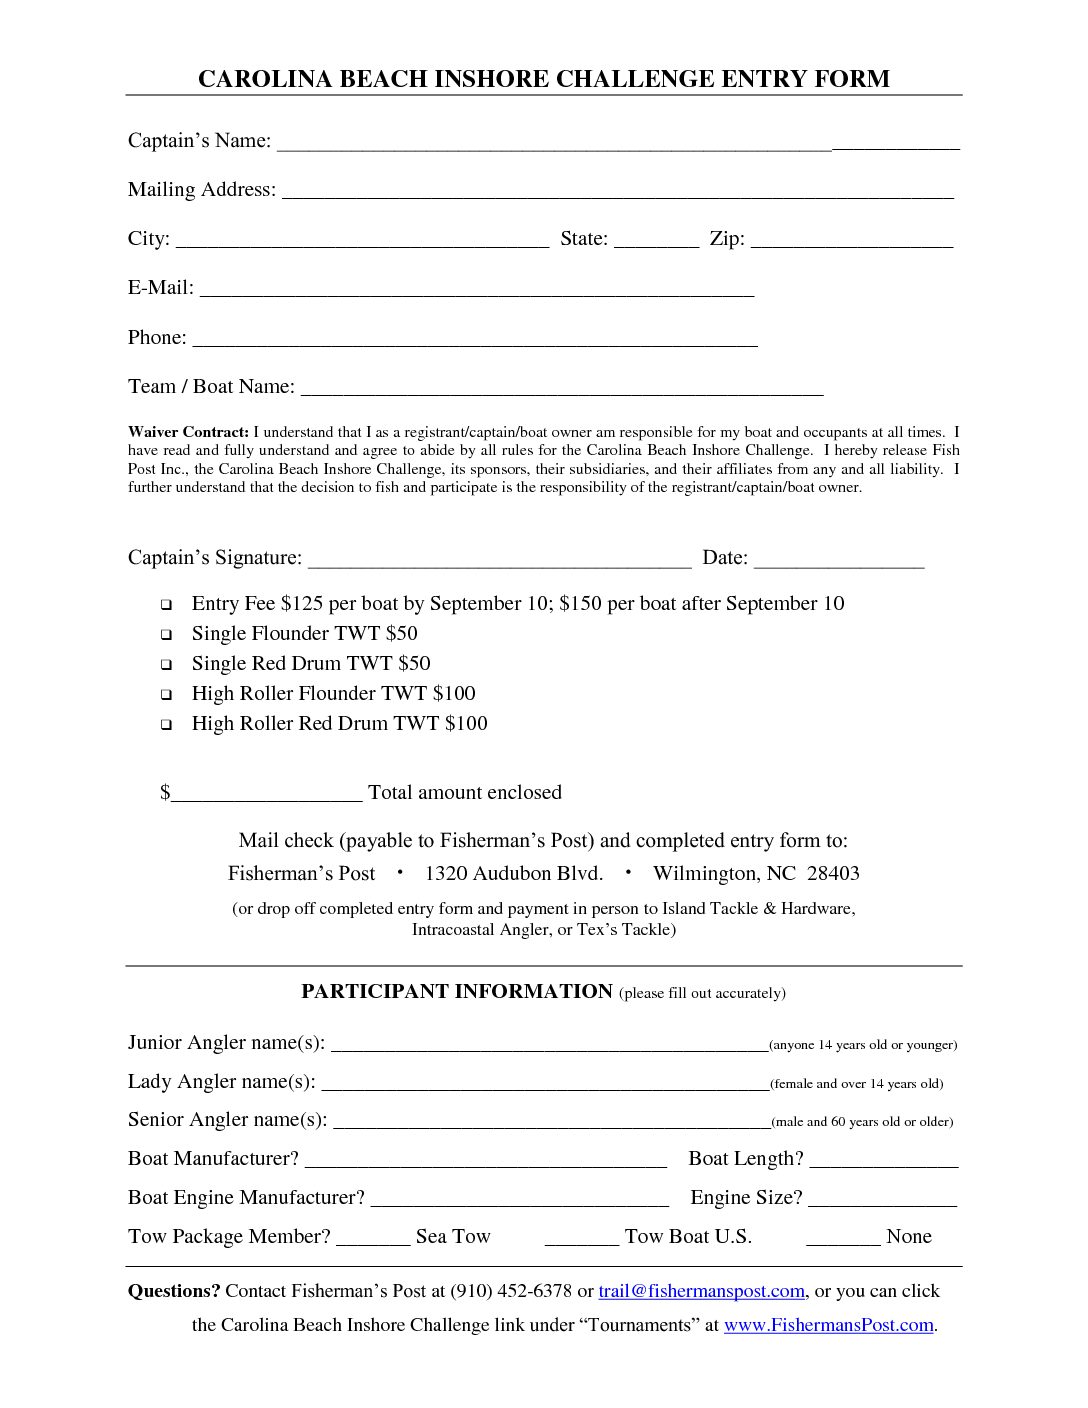 2018 Carolina Beach Inshore Challenge Print Entry Form